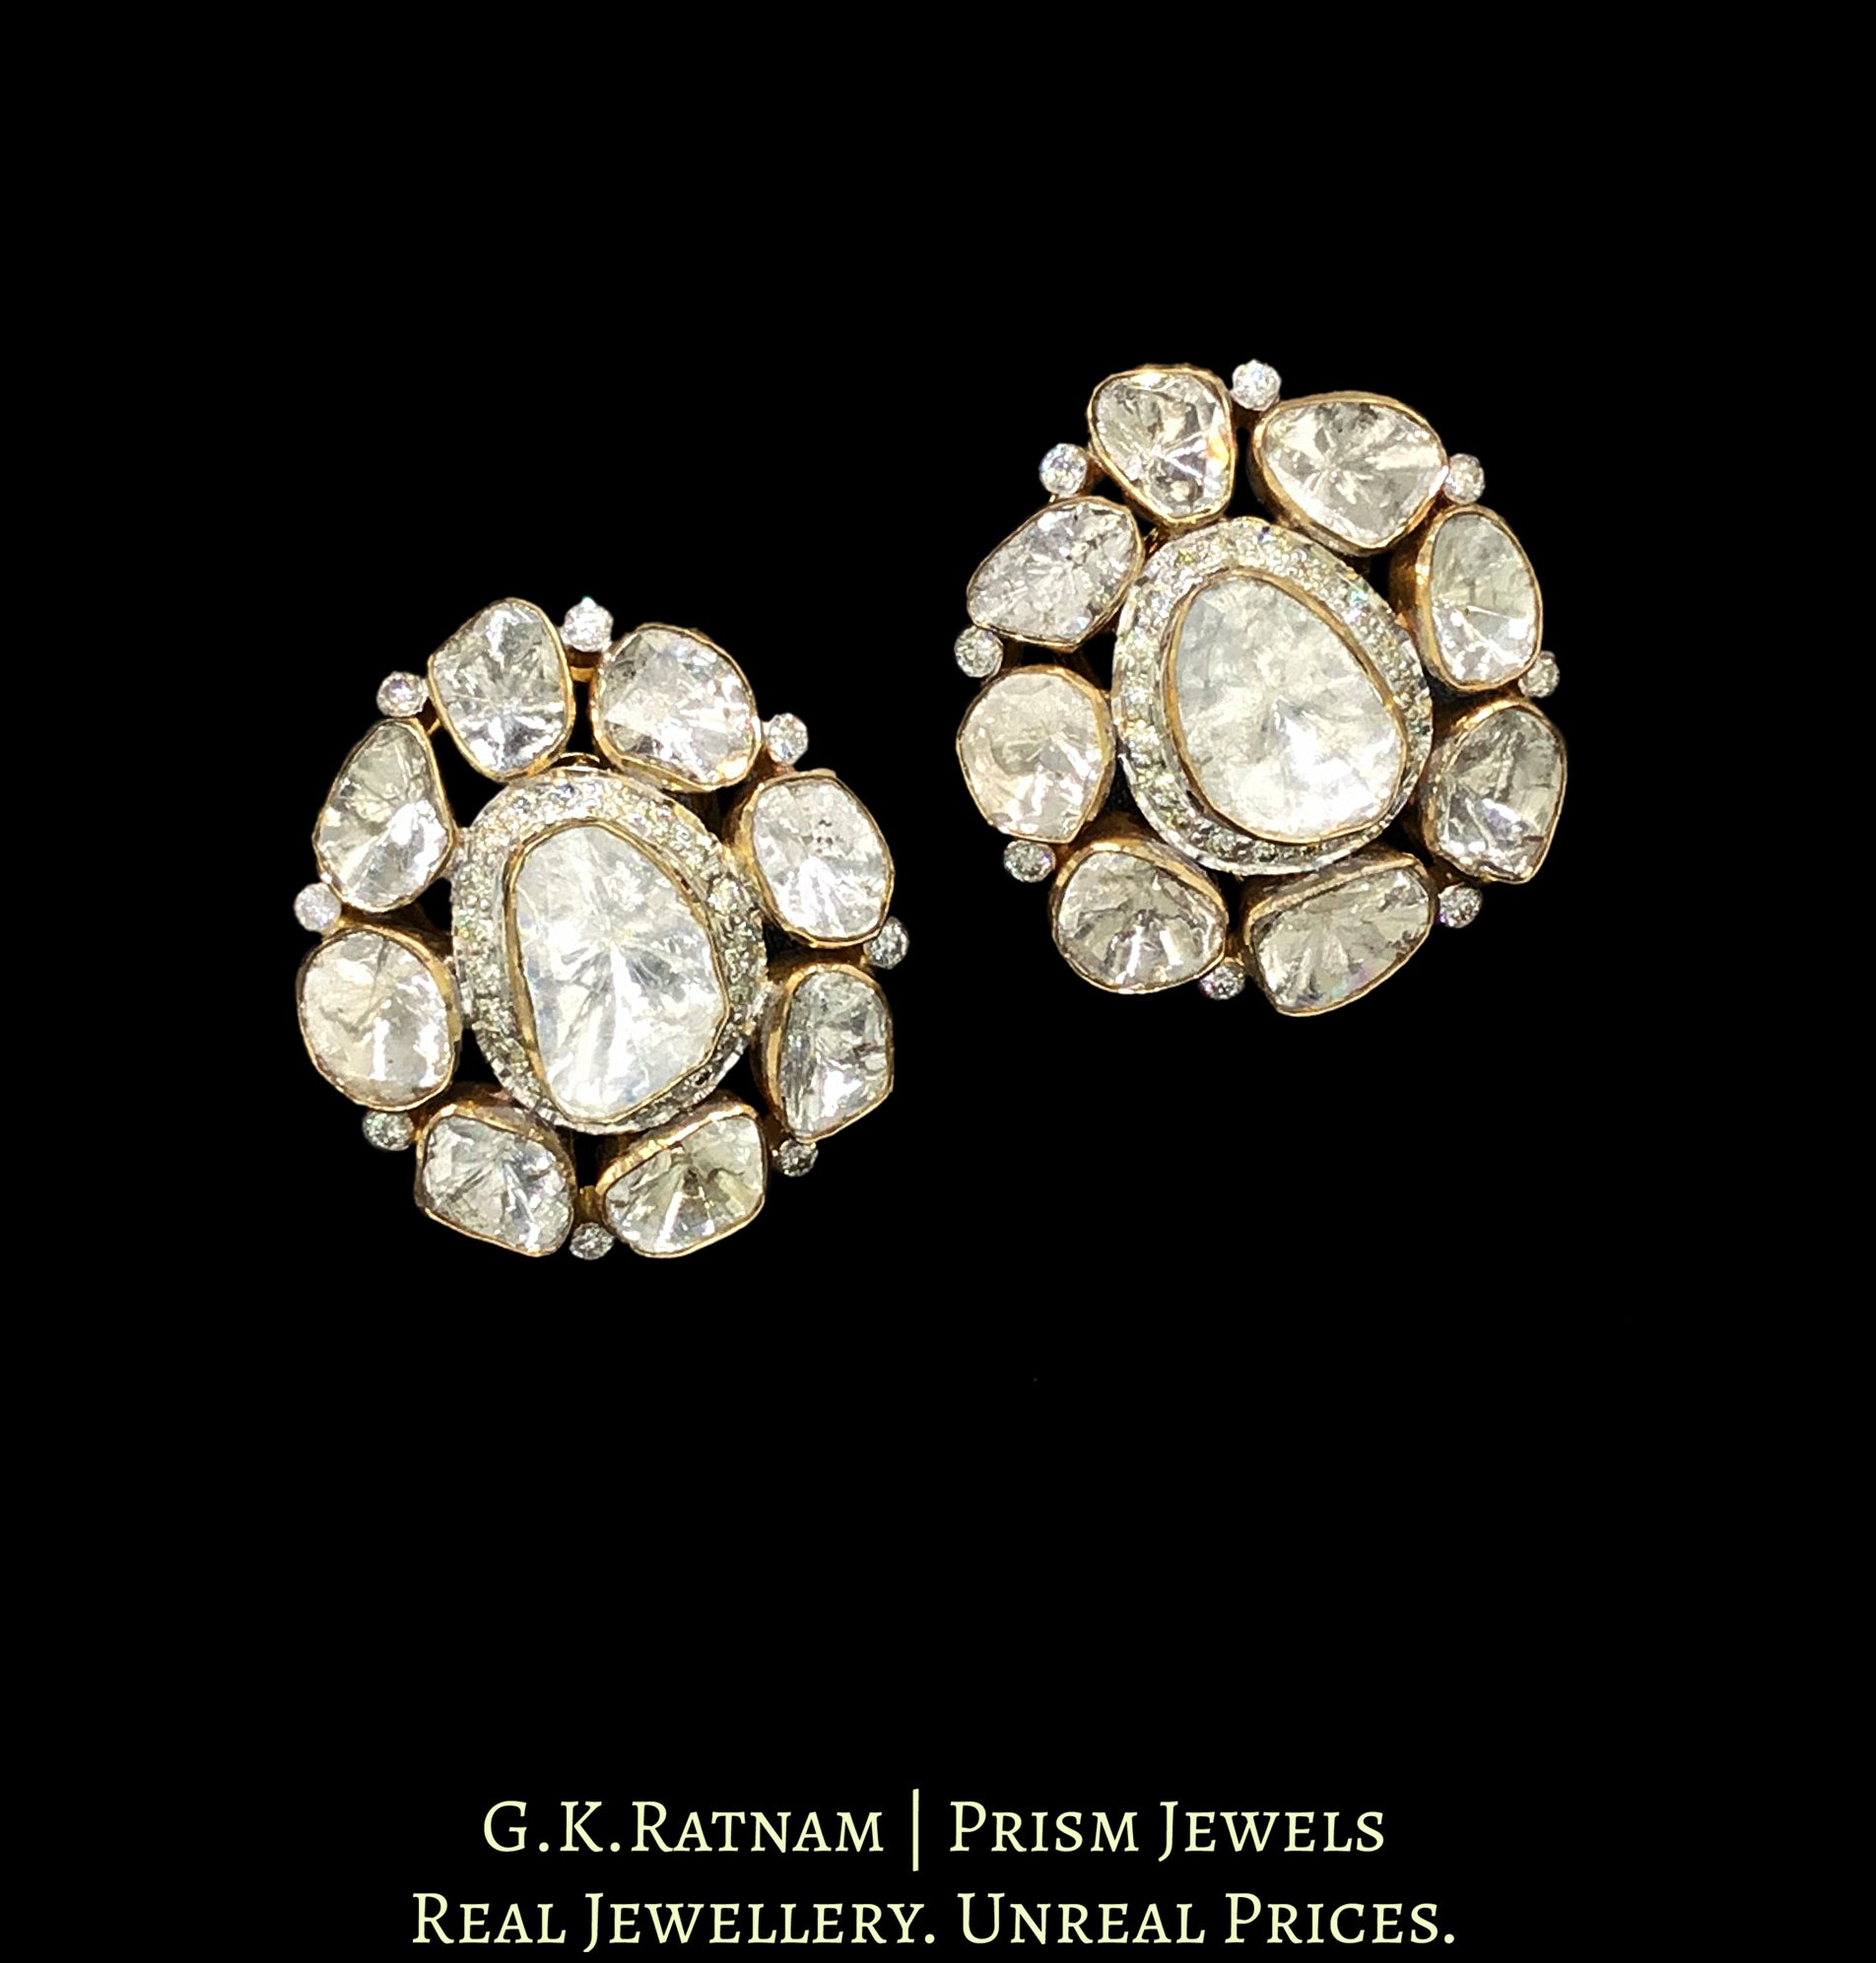 14k Gold and Diamond Polki Open Setting pear-shaped Tops / Studs Earring Pair - G. K. Ratnam